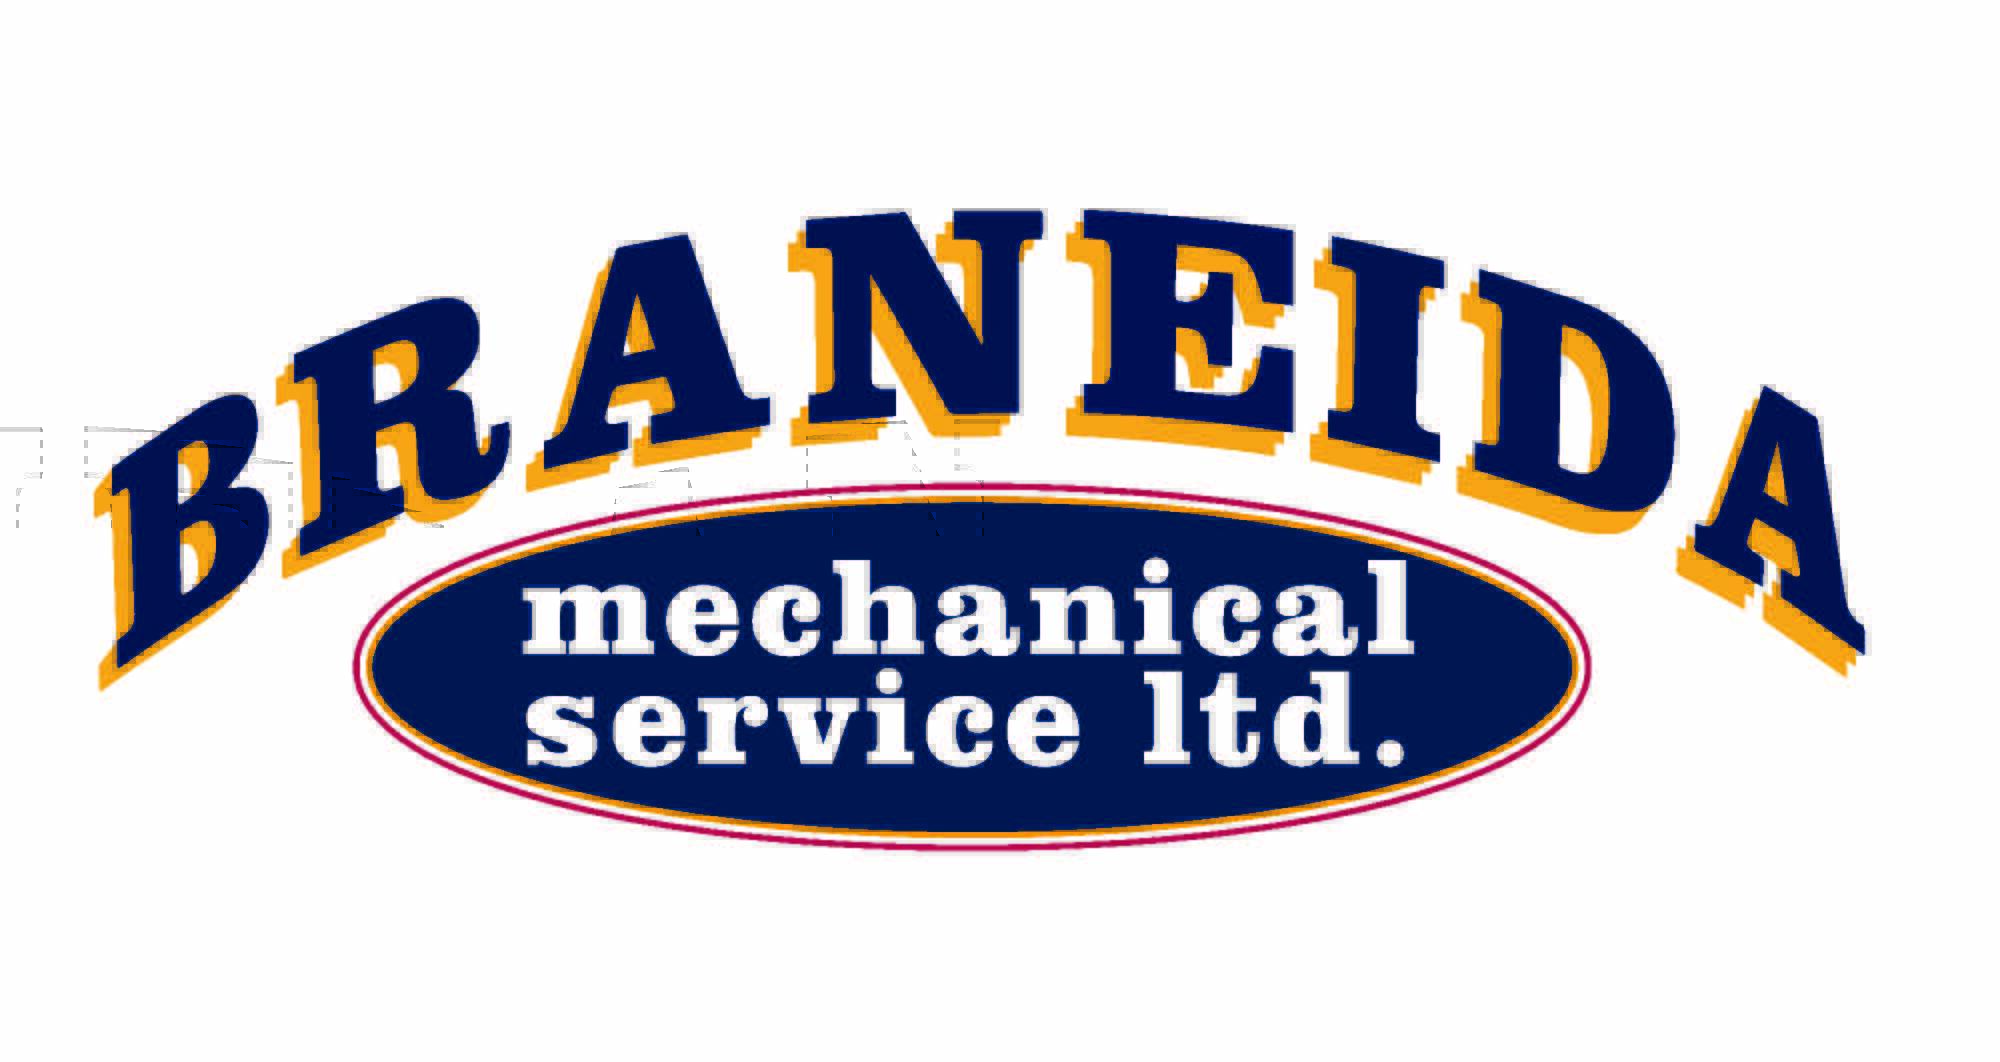 Braneida Mechanical Service Ltd.